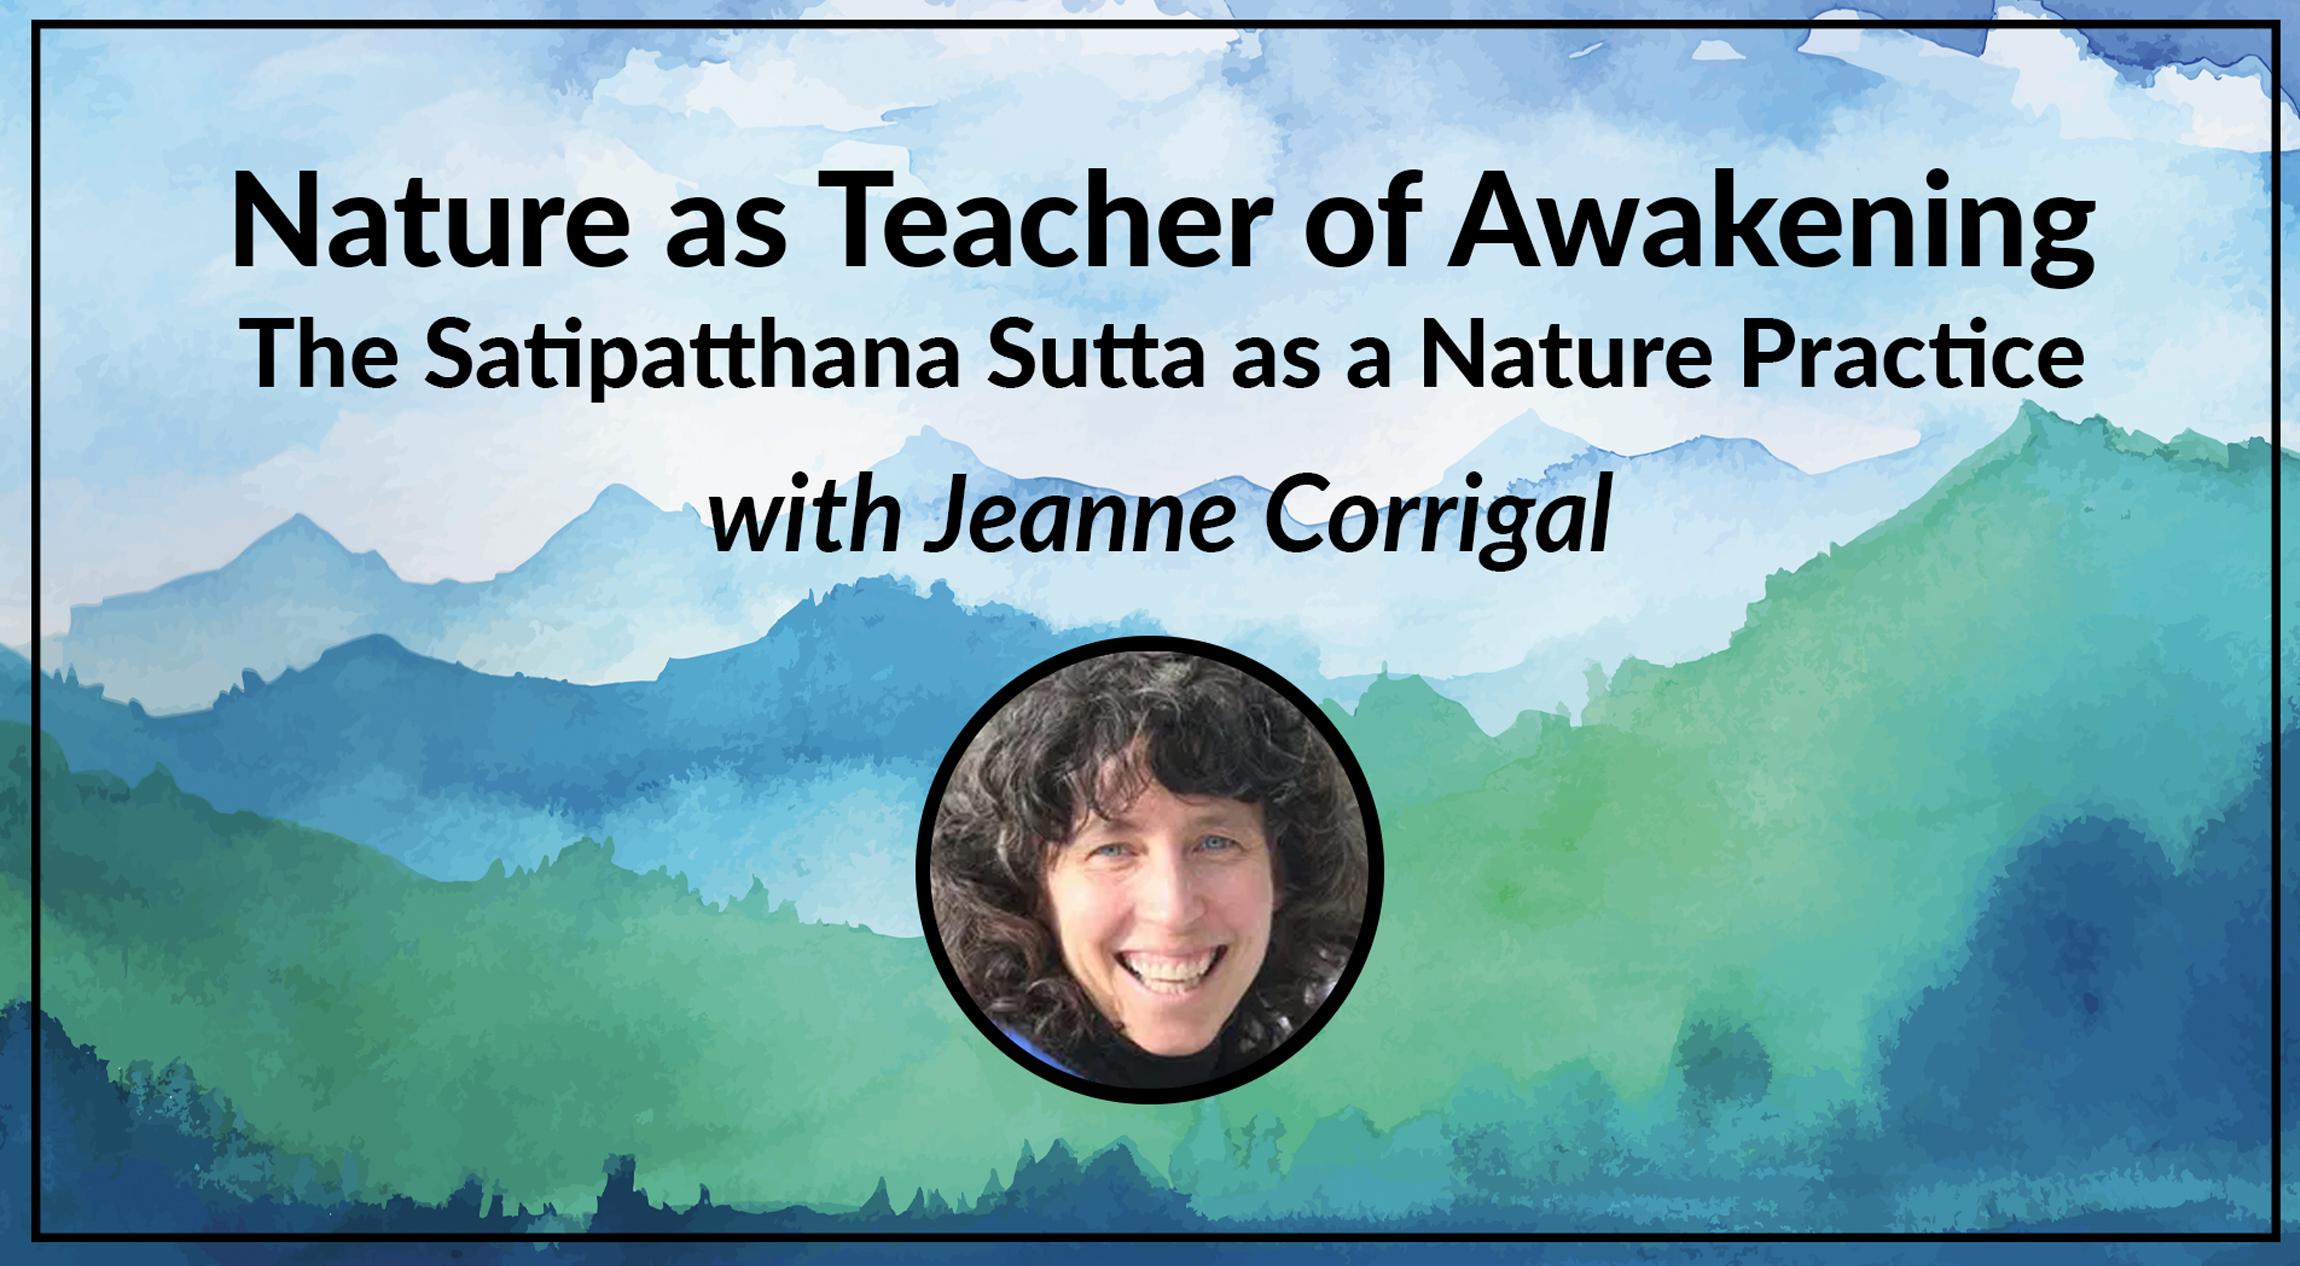 Nature as Teacher of Awakening with Jeanne Corrigal